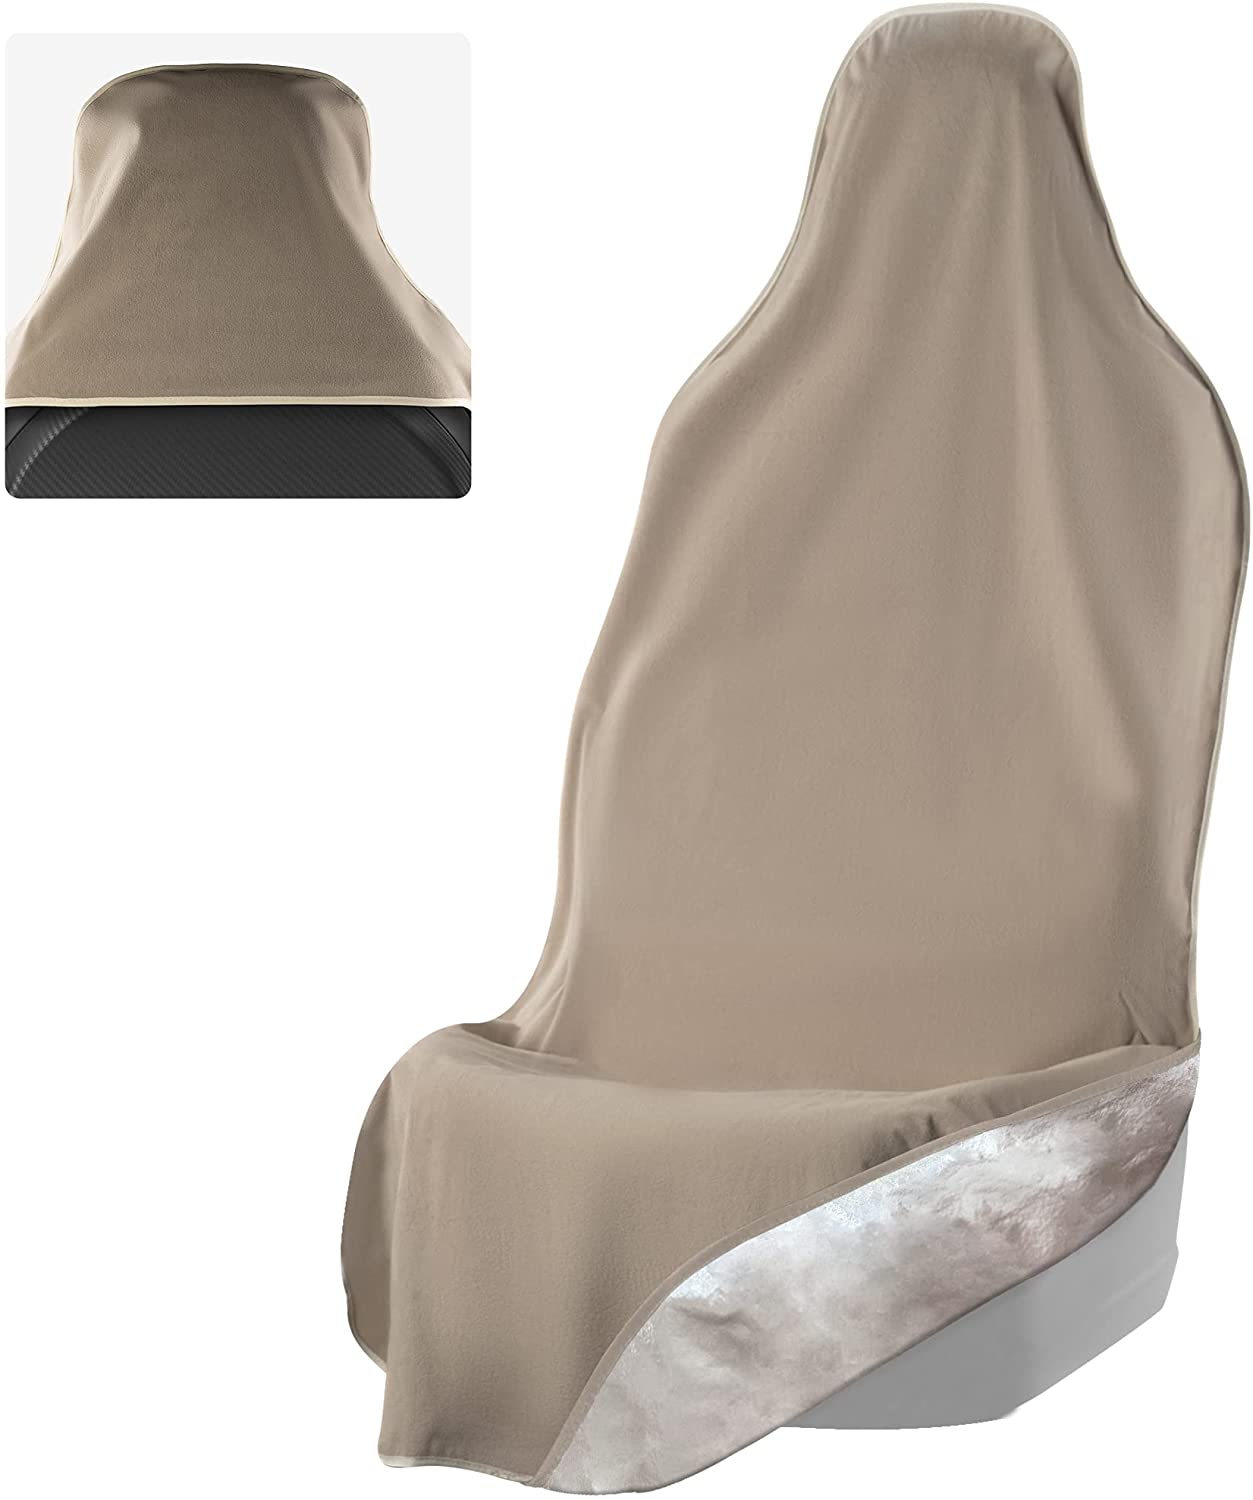 EliteSport+ Non-Slip Waterproof Seat Cover - Tan